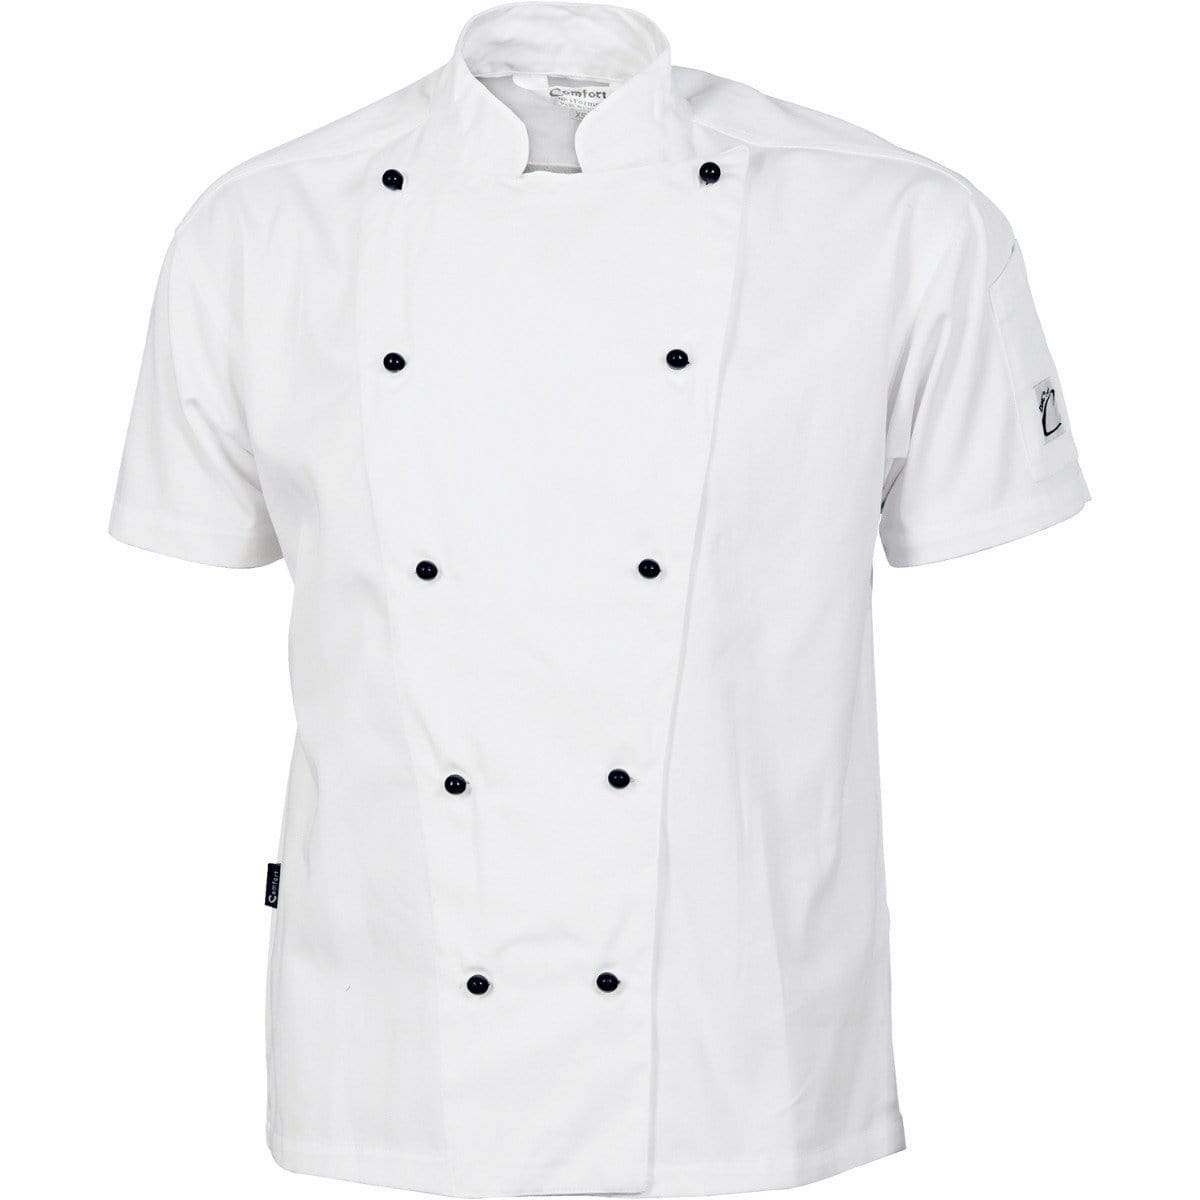 Dnc Workwear Cool-breeze Cotton Short Sleeve Chef Jacket - 1103 Hospitality & Chefwear DNC Workwear White XS 